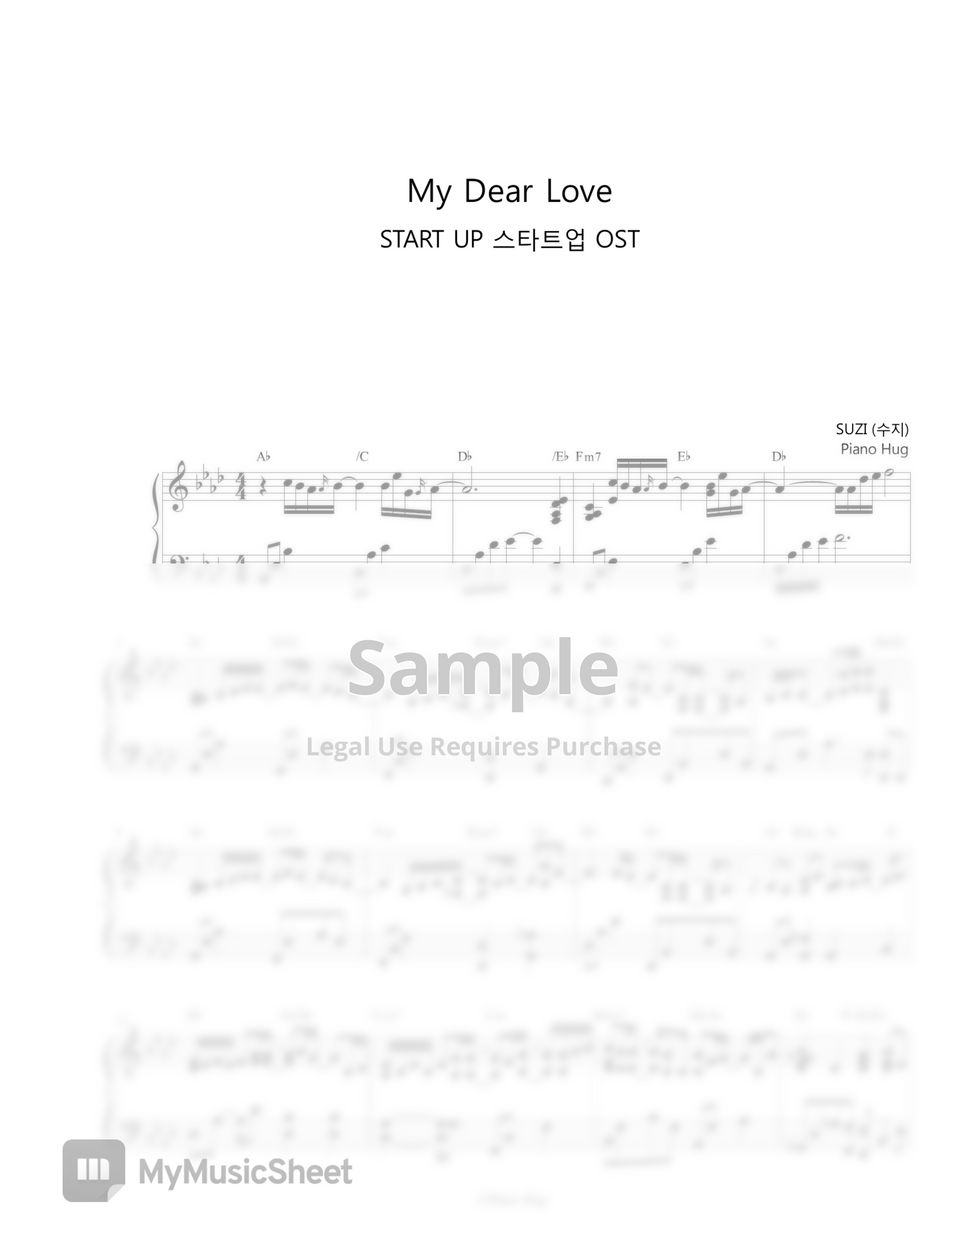 SUZI (수지) - My Dear Love (START UP OST) by Piano Hug